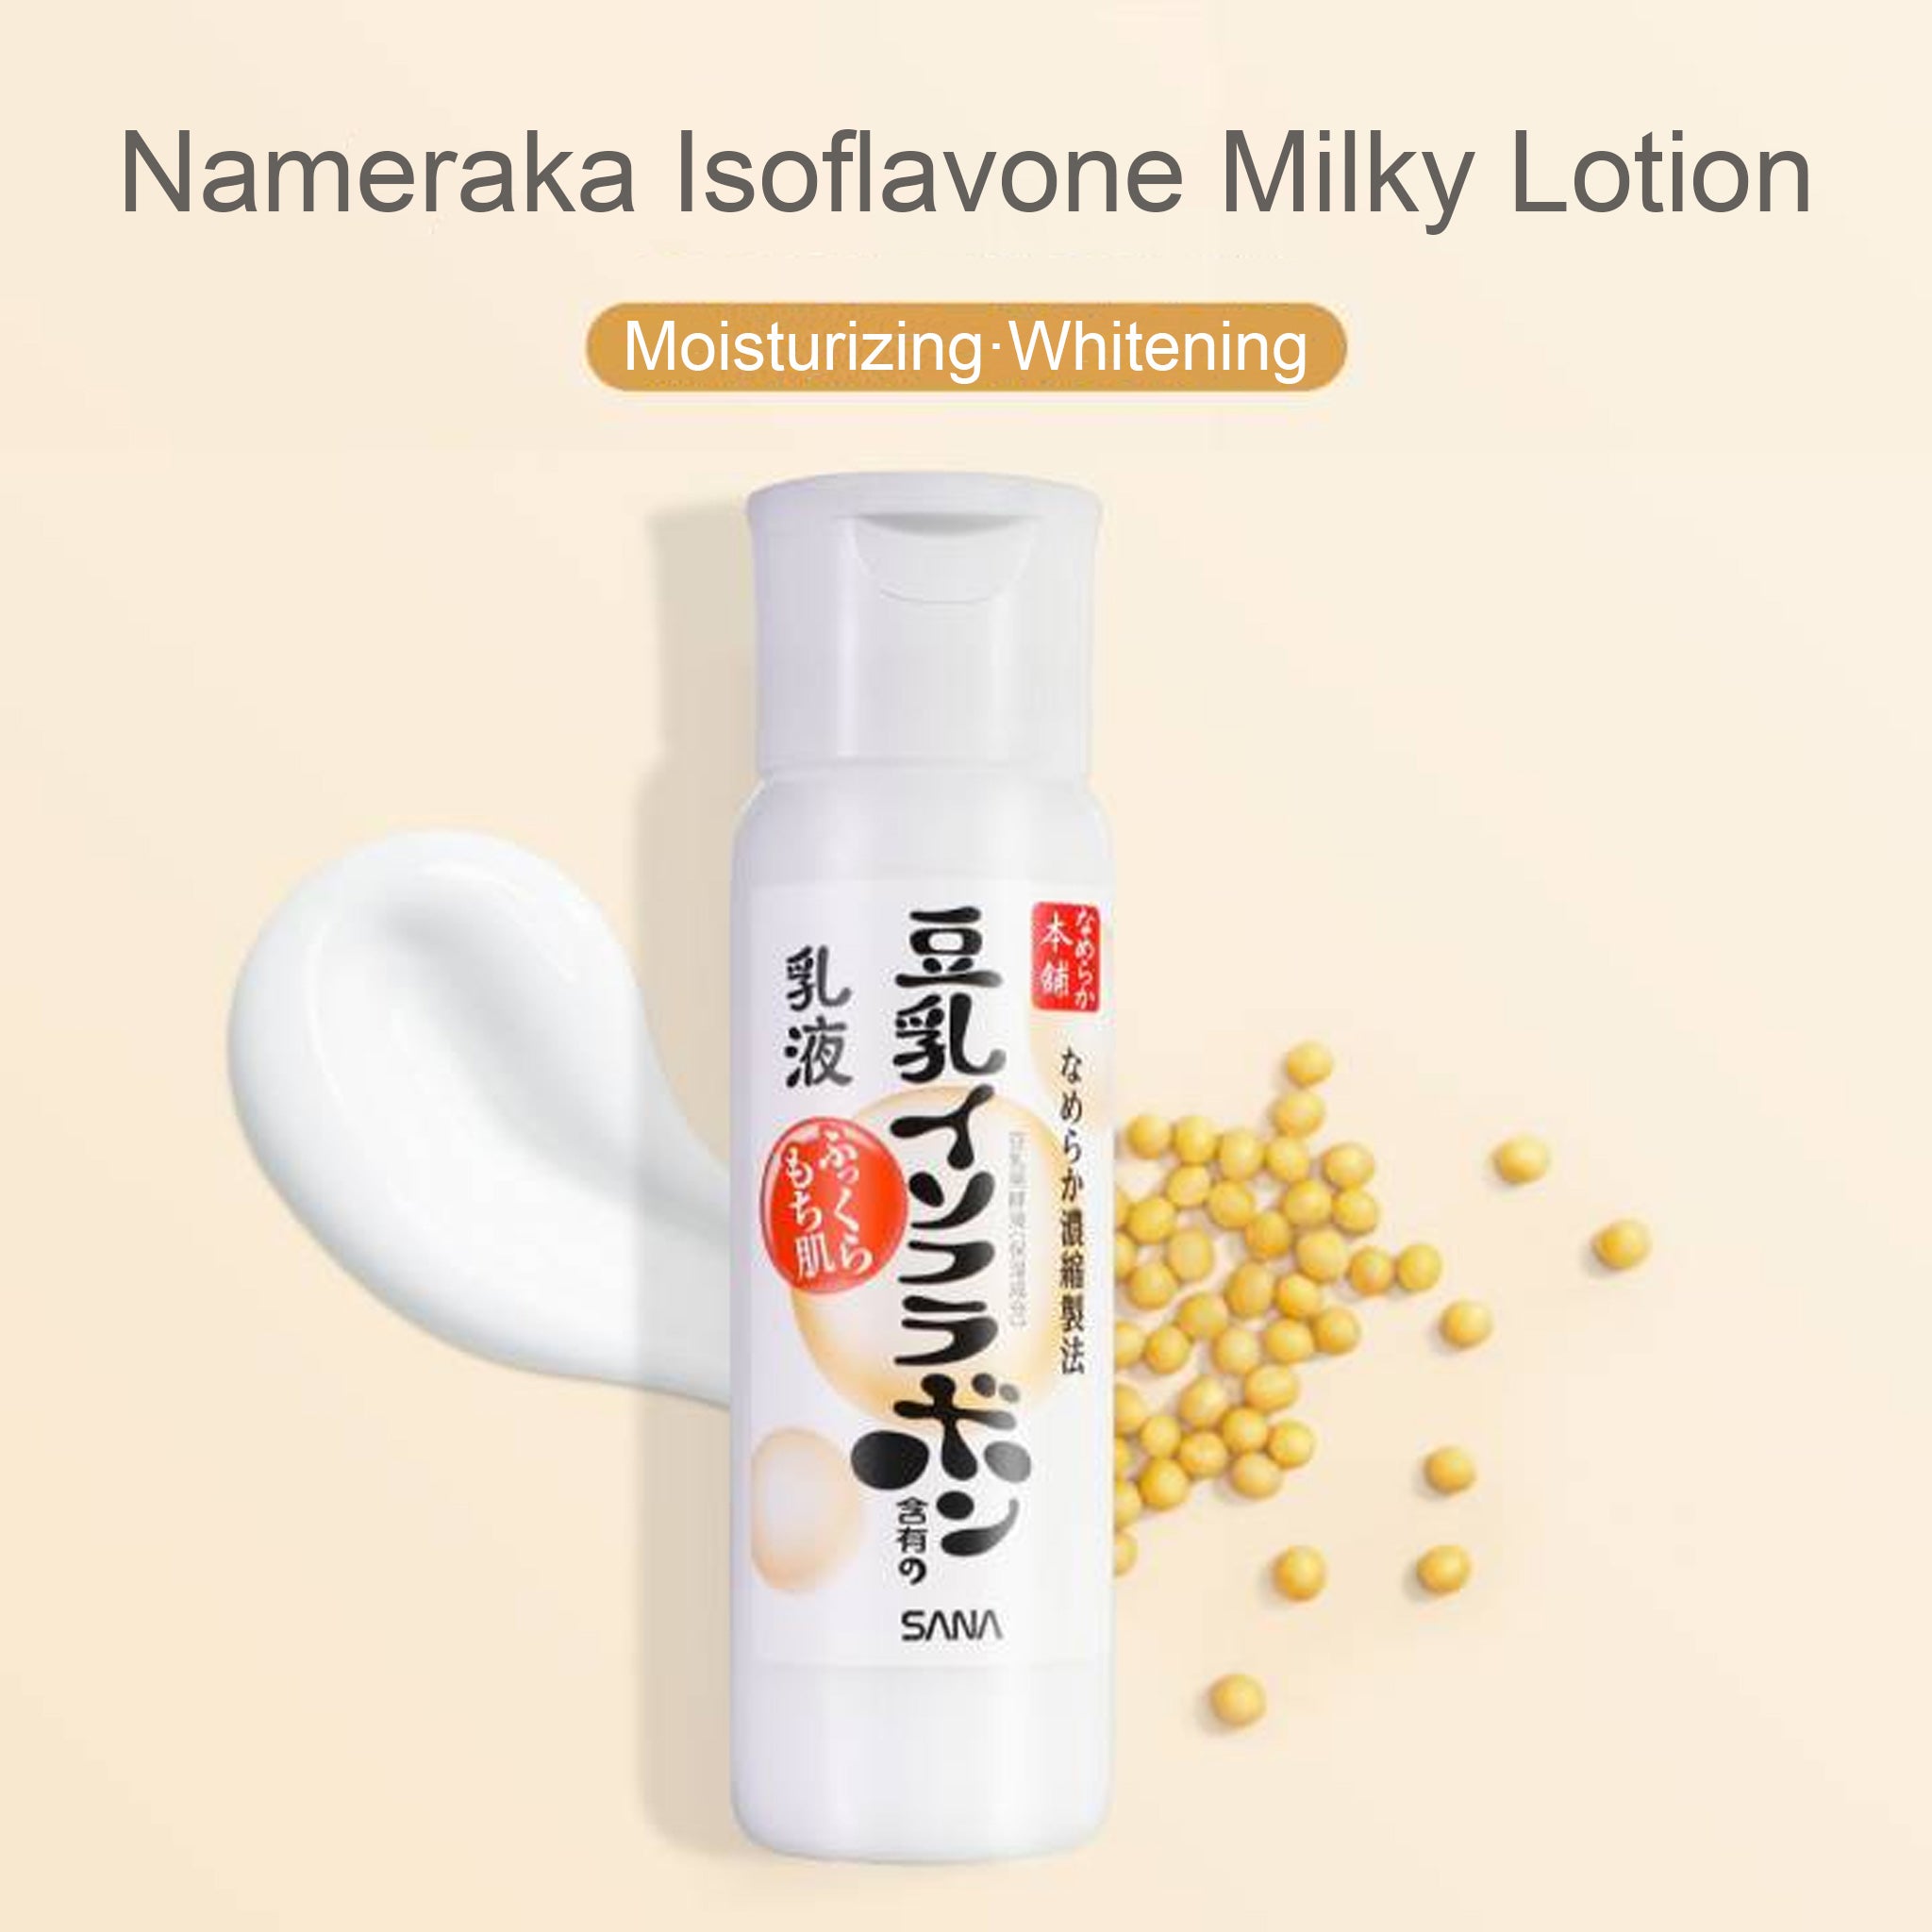 SANA Nameraka Isoflavone Milky Lotion 150ml